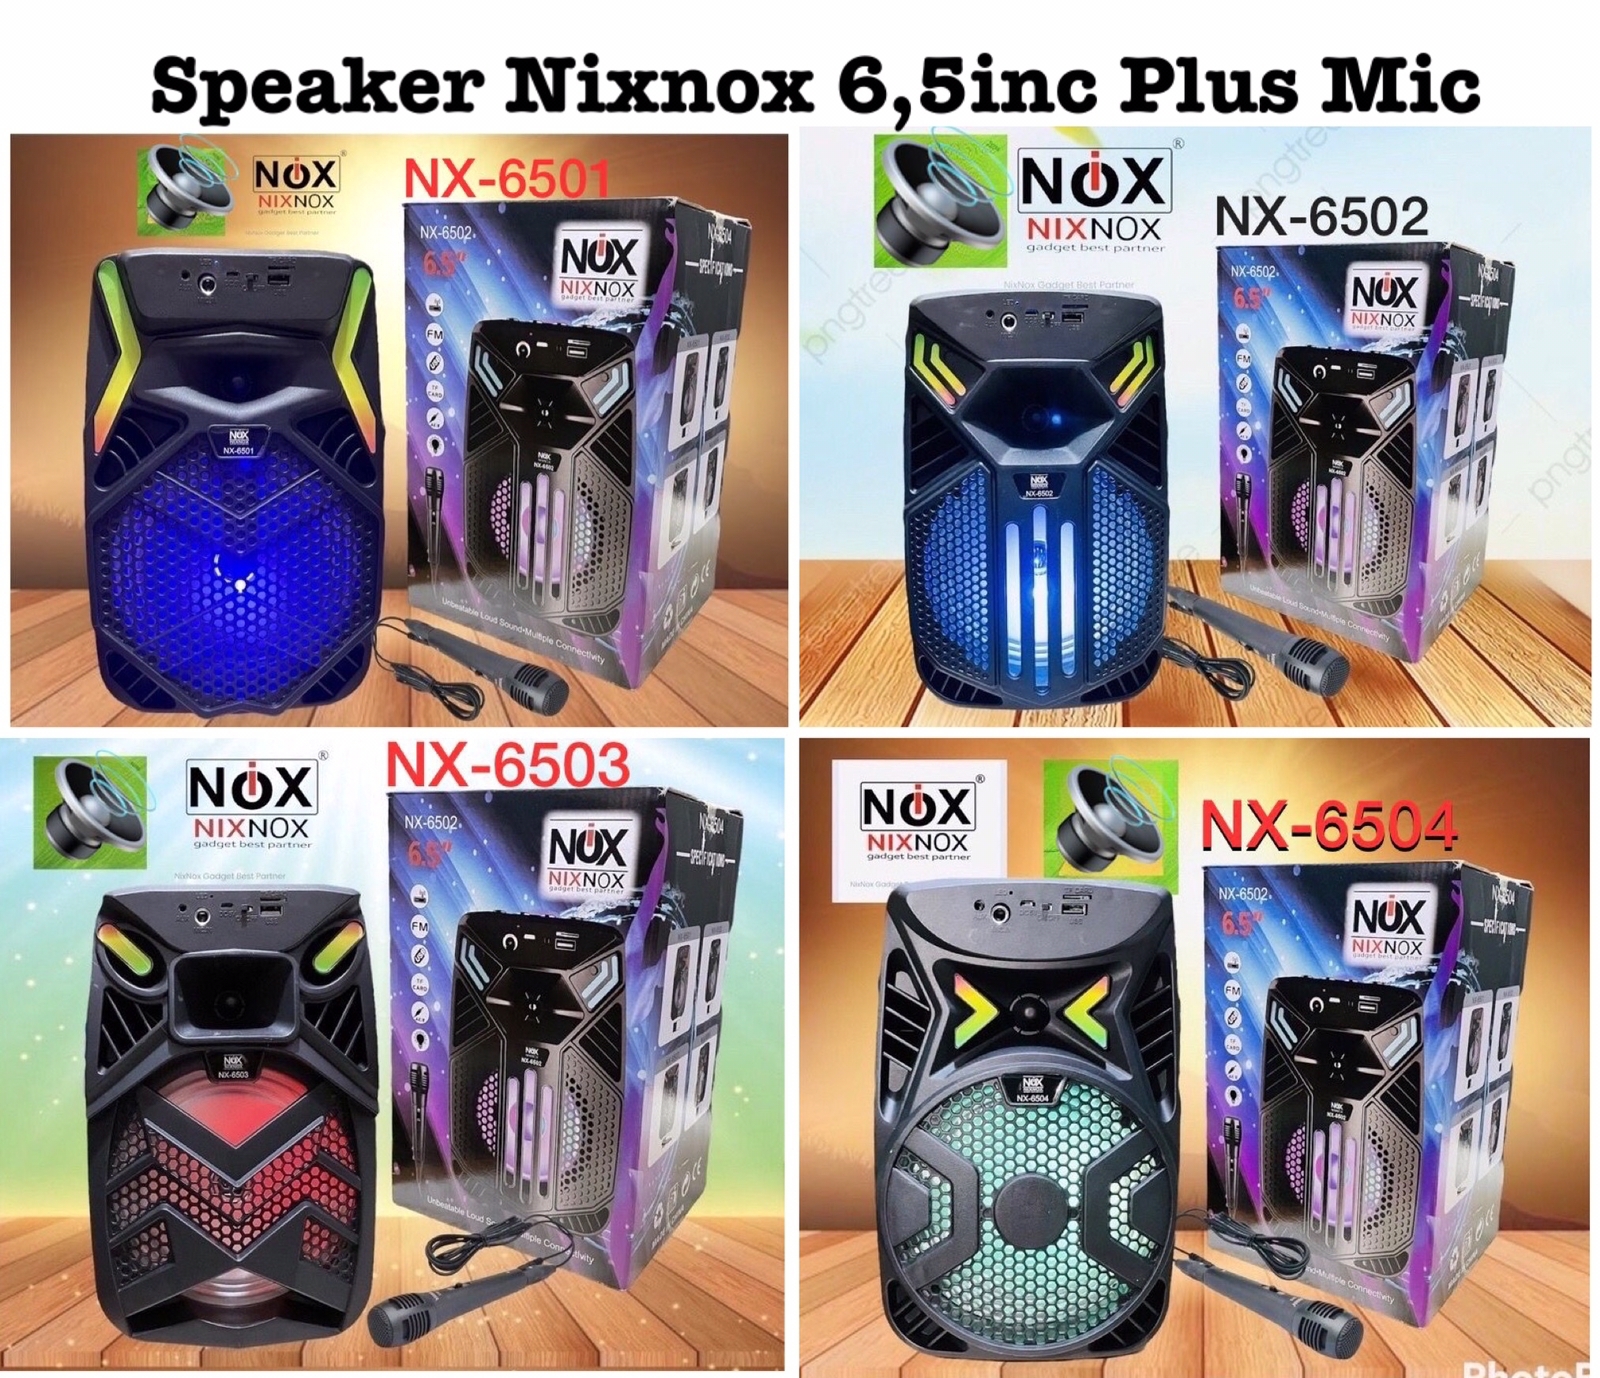 SPEAKER BLUETOOTH NIXNOX 6,5 INC NX-6501, NX-6502, NX-6503, NX-6504